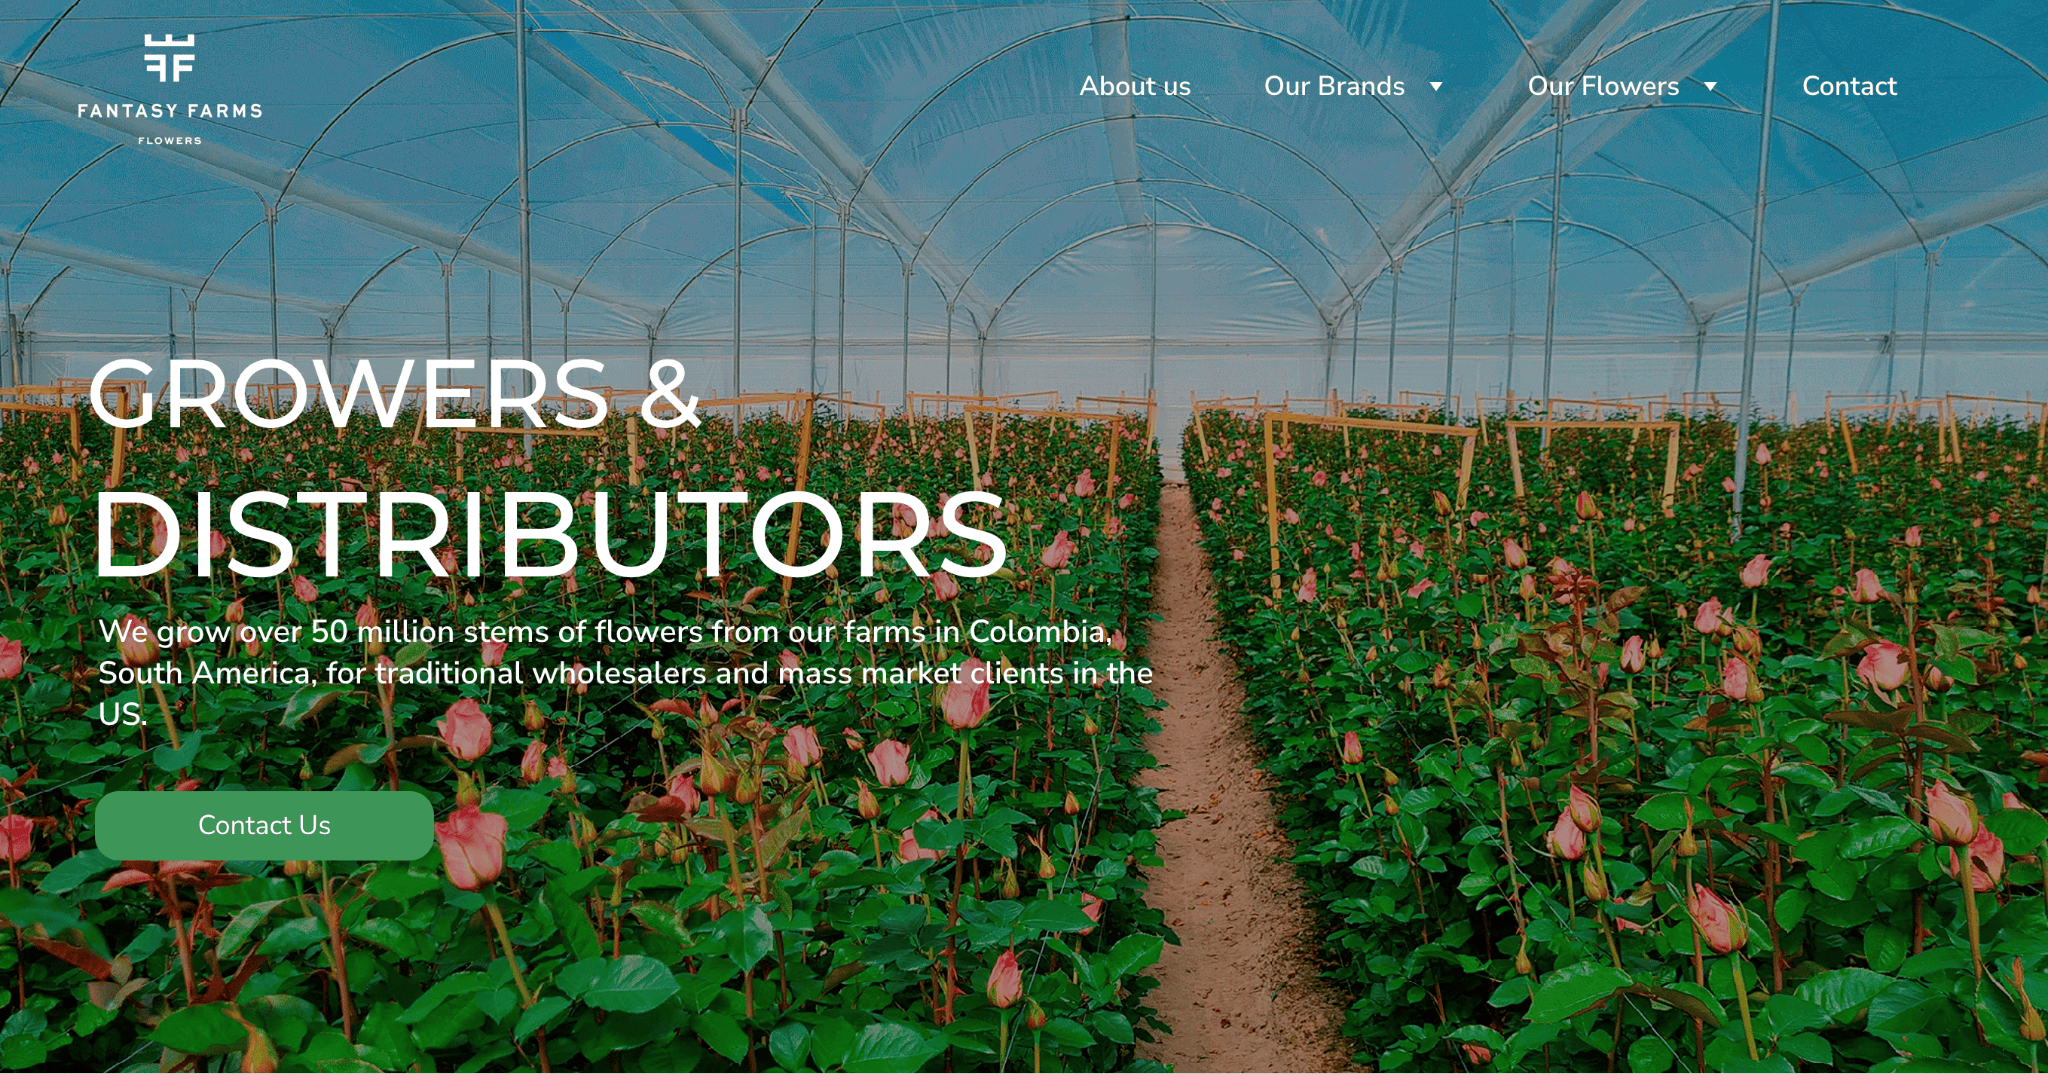 zyro website example - fantasy farms